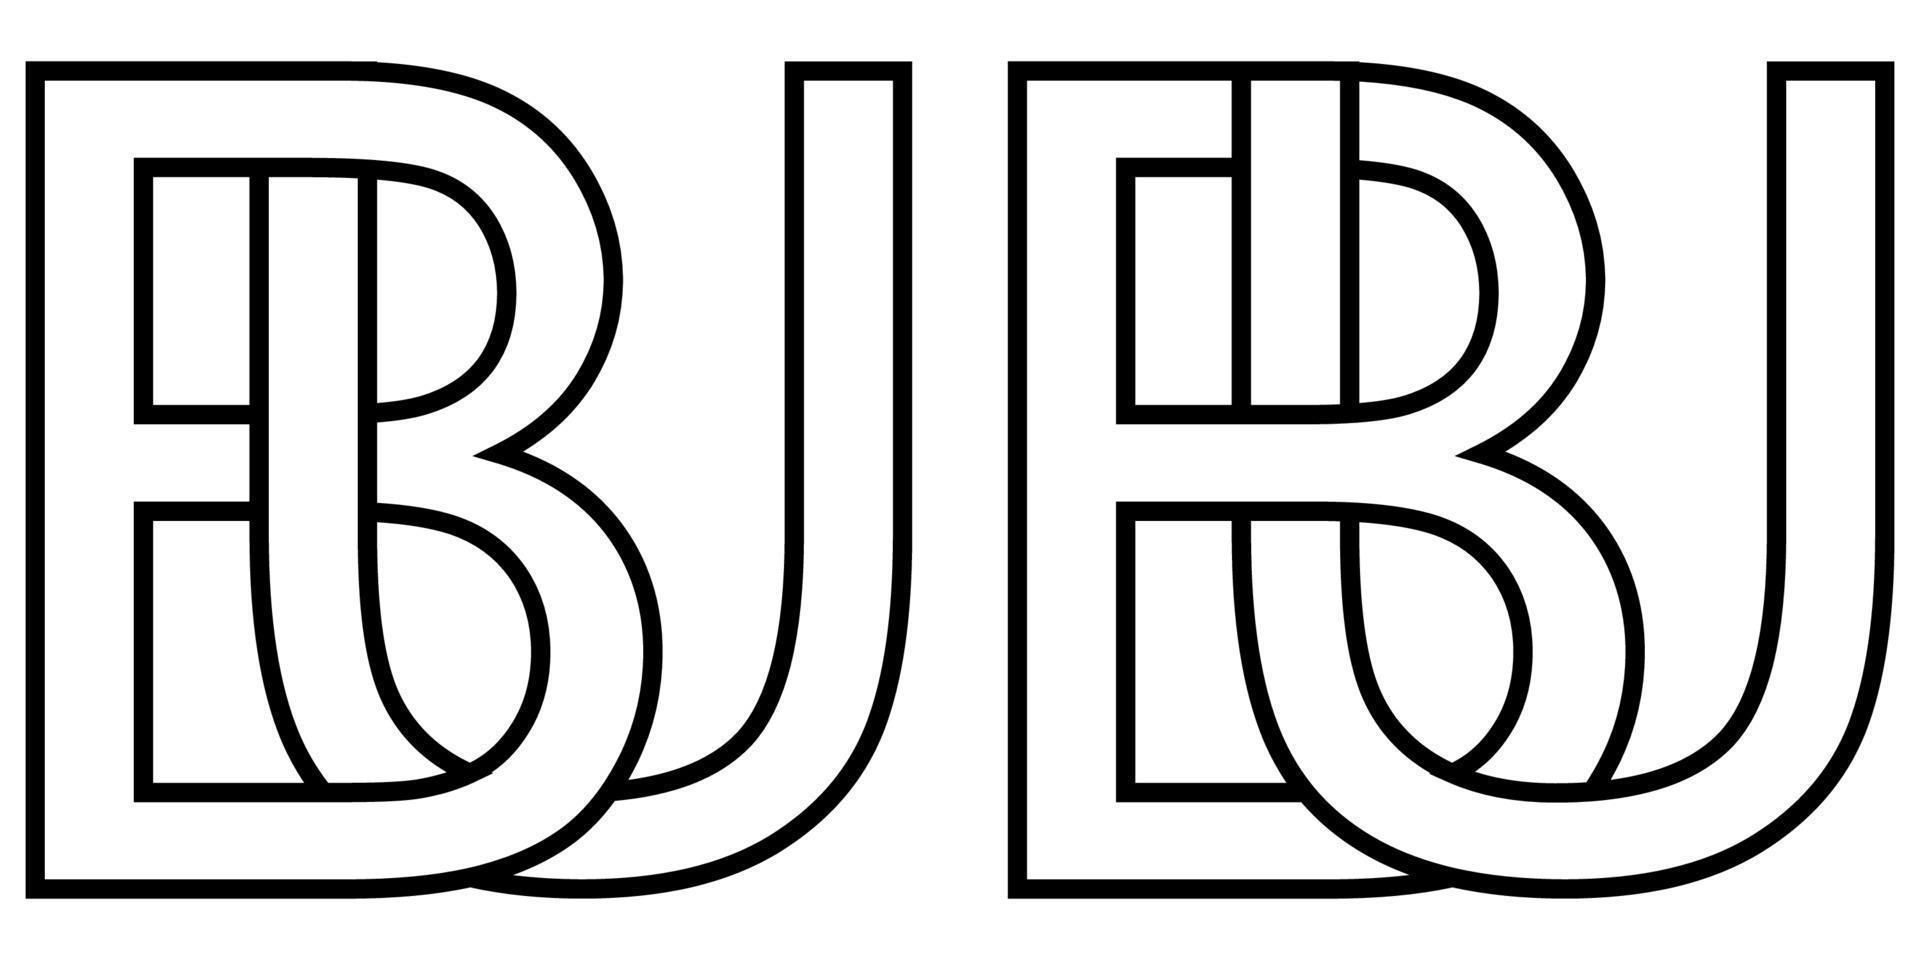 logo firmar bu ub icono firmar dos entrelazado letras b, tu vector logo pero, ub primero capital letras modelo alfabeto b, tu